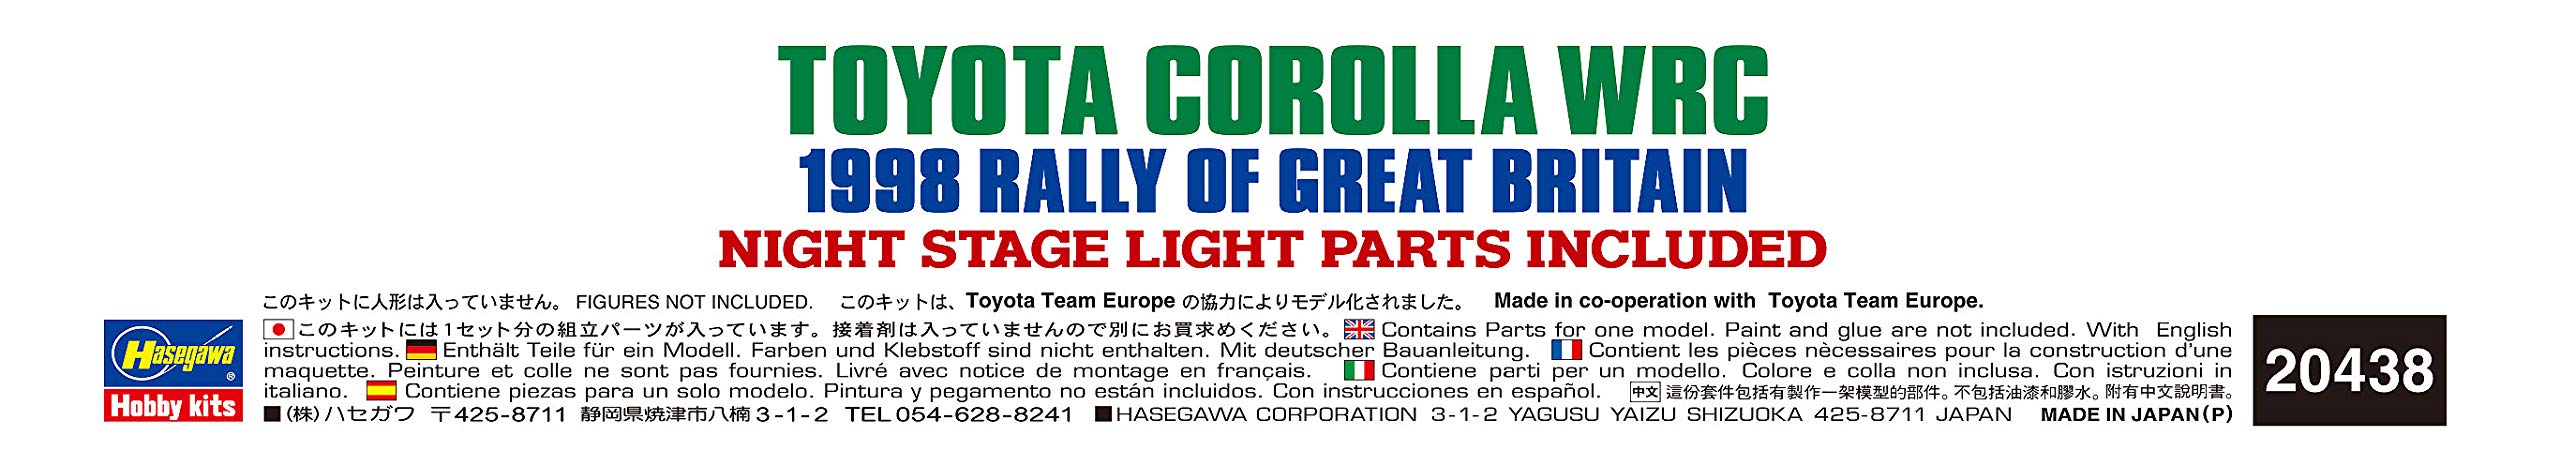 Hasegawa 20438 Toyota Corolla WRC 1998 Rallye Großbritannien, Bausatz im Maßstab 1/24